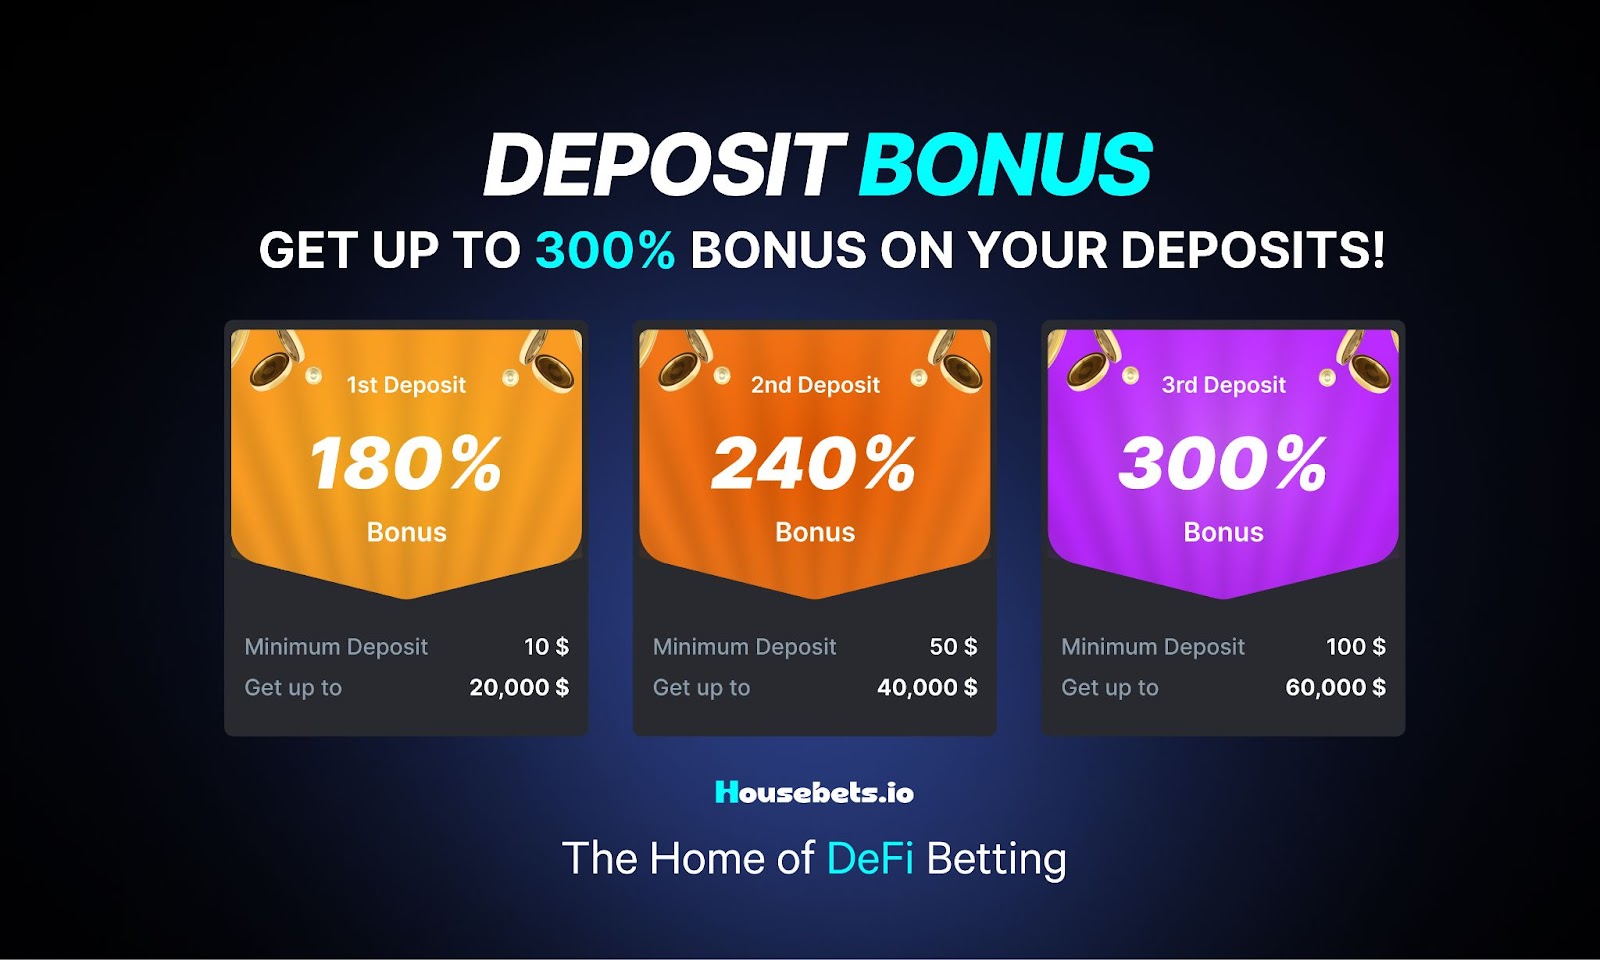 Housebets up to 300% deposit bonus